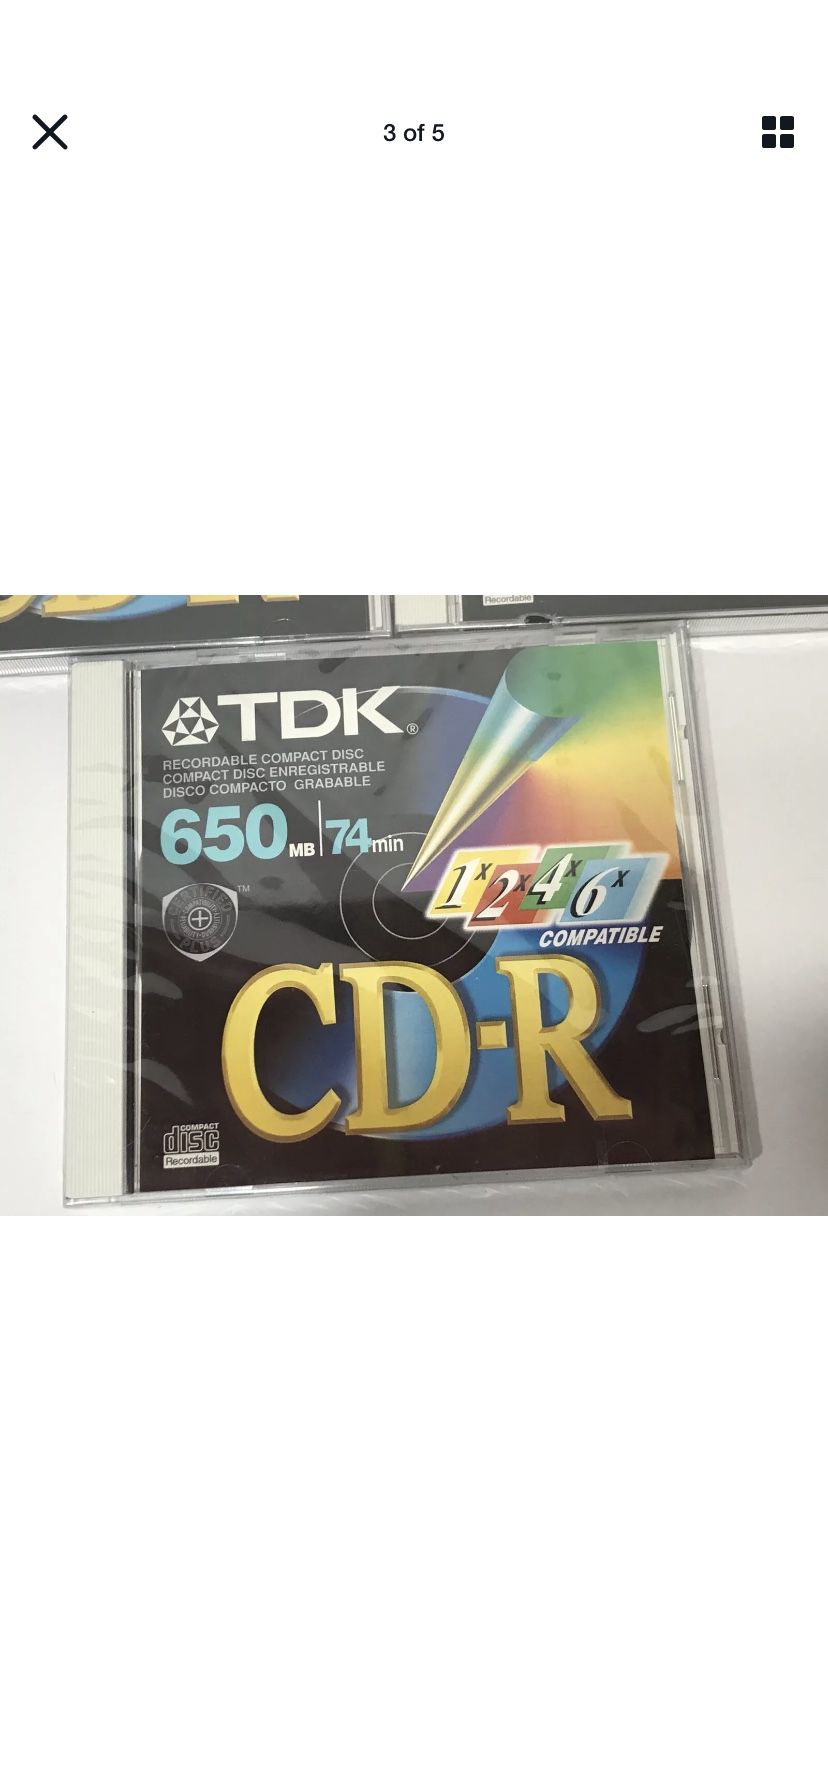 Lot of 5 CD-R TDK 650MB 74 Min CD-R74 V